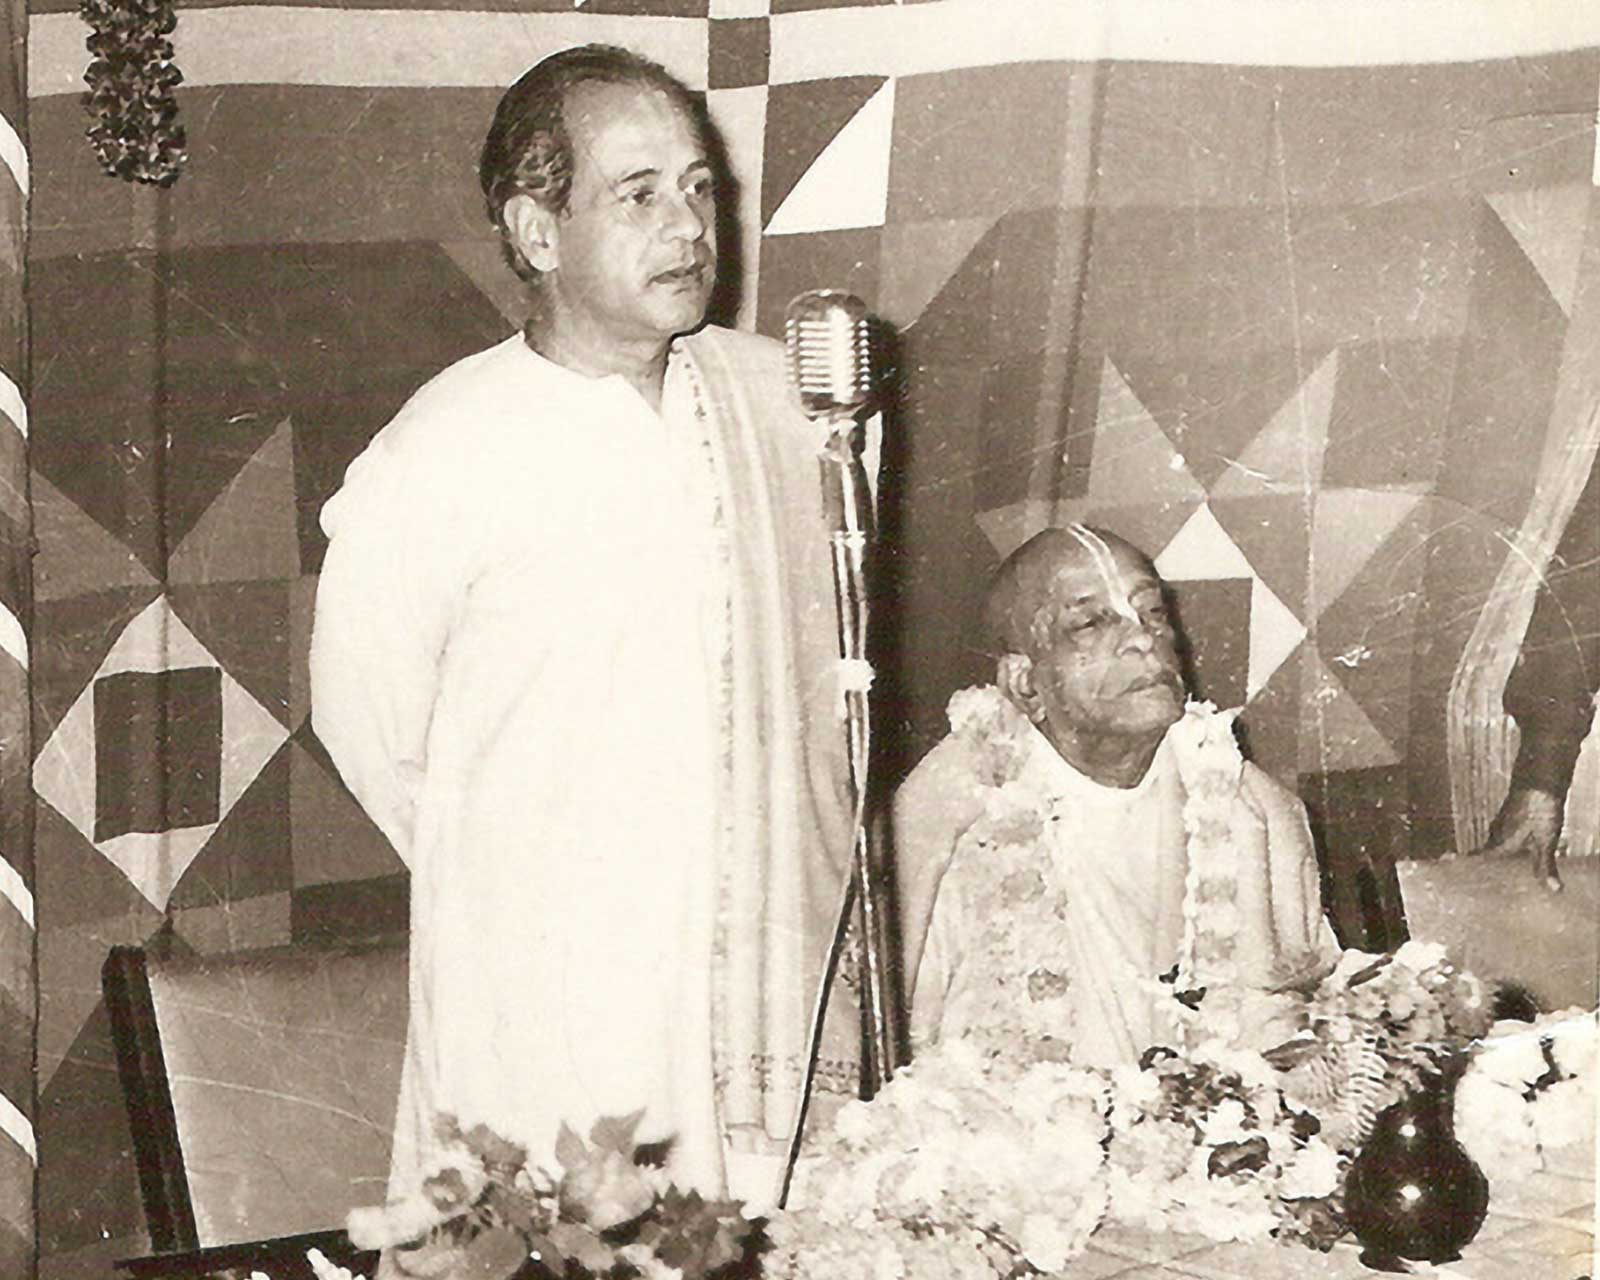 Visvambhara Goswami and Srila Prabhupada